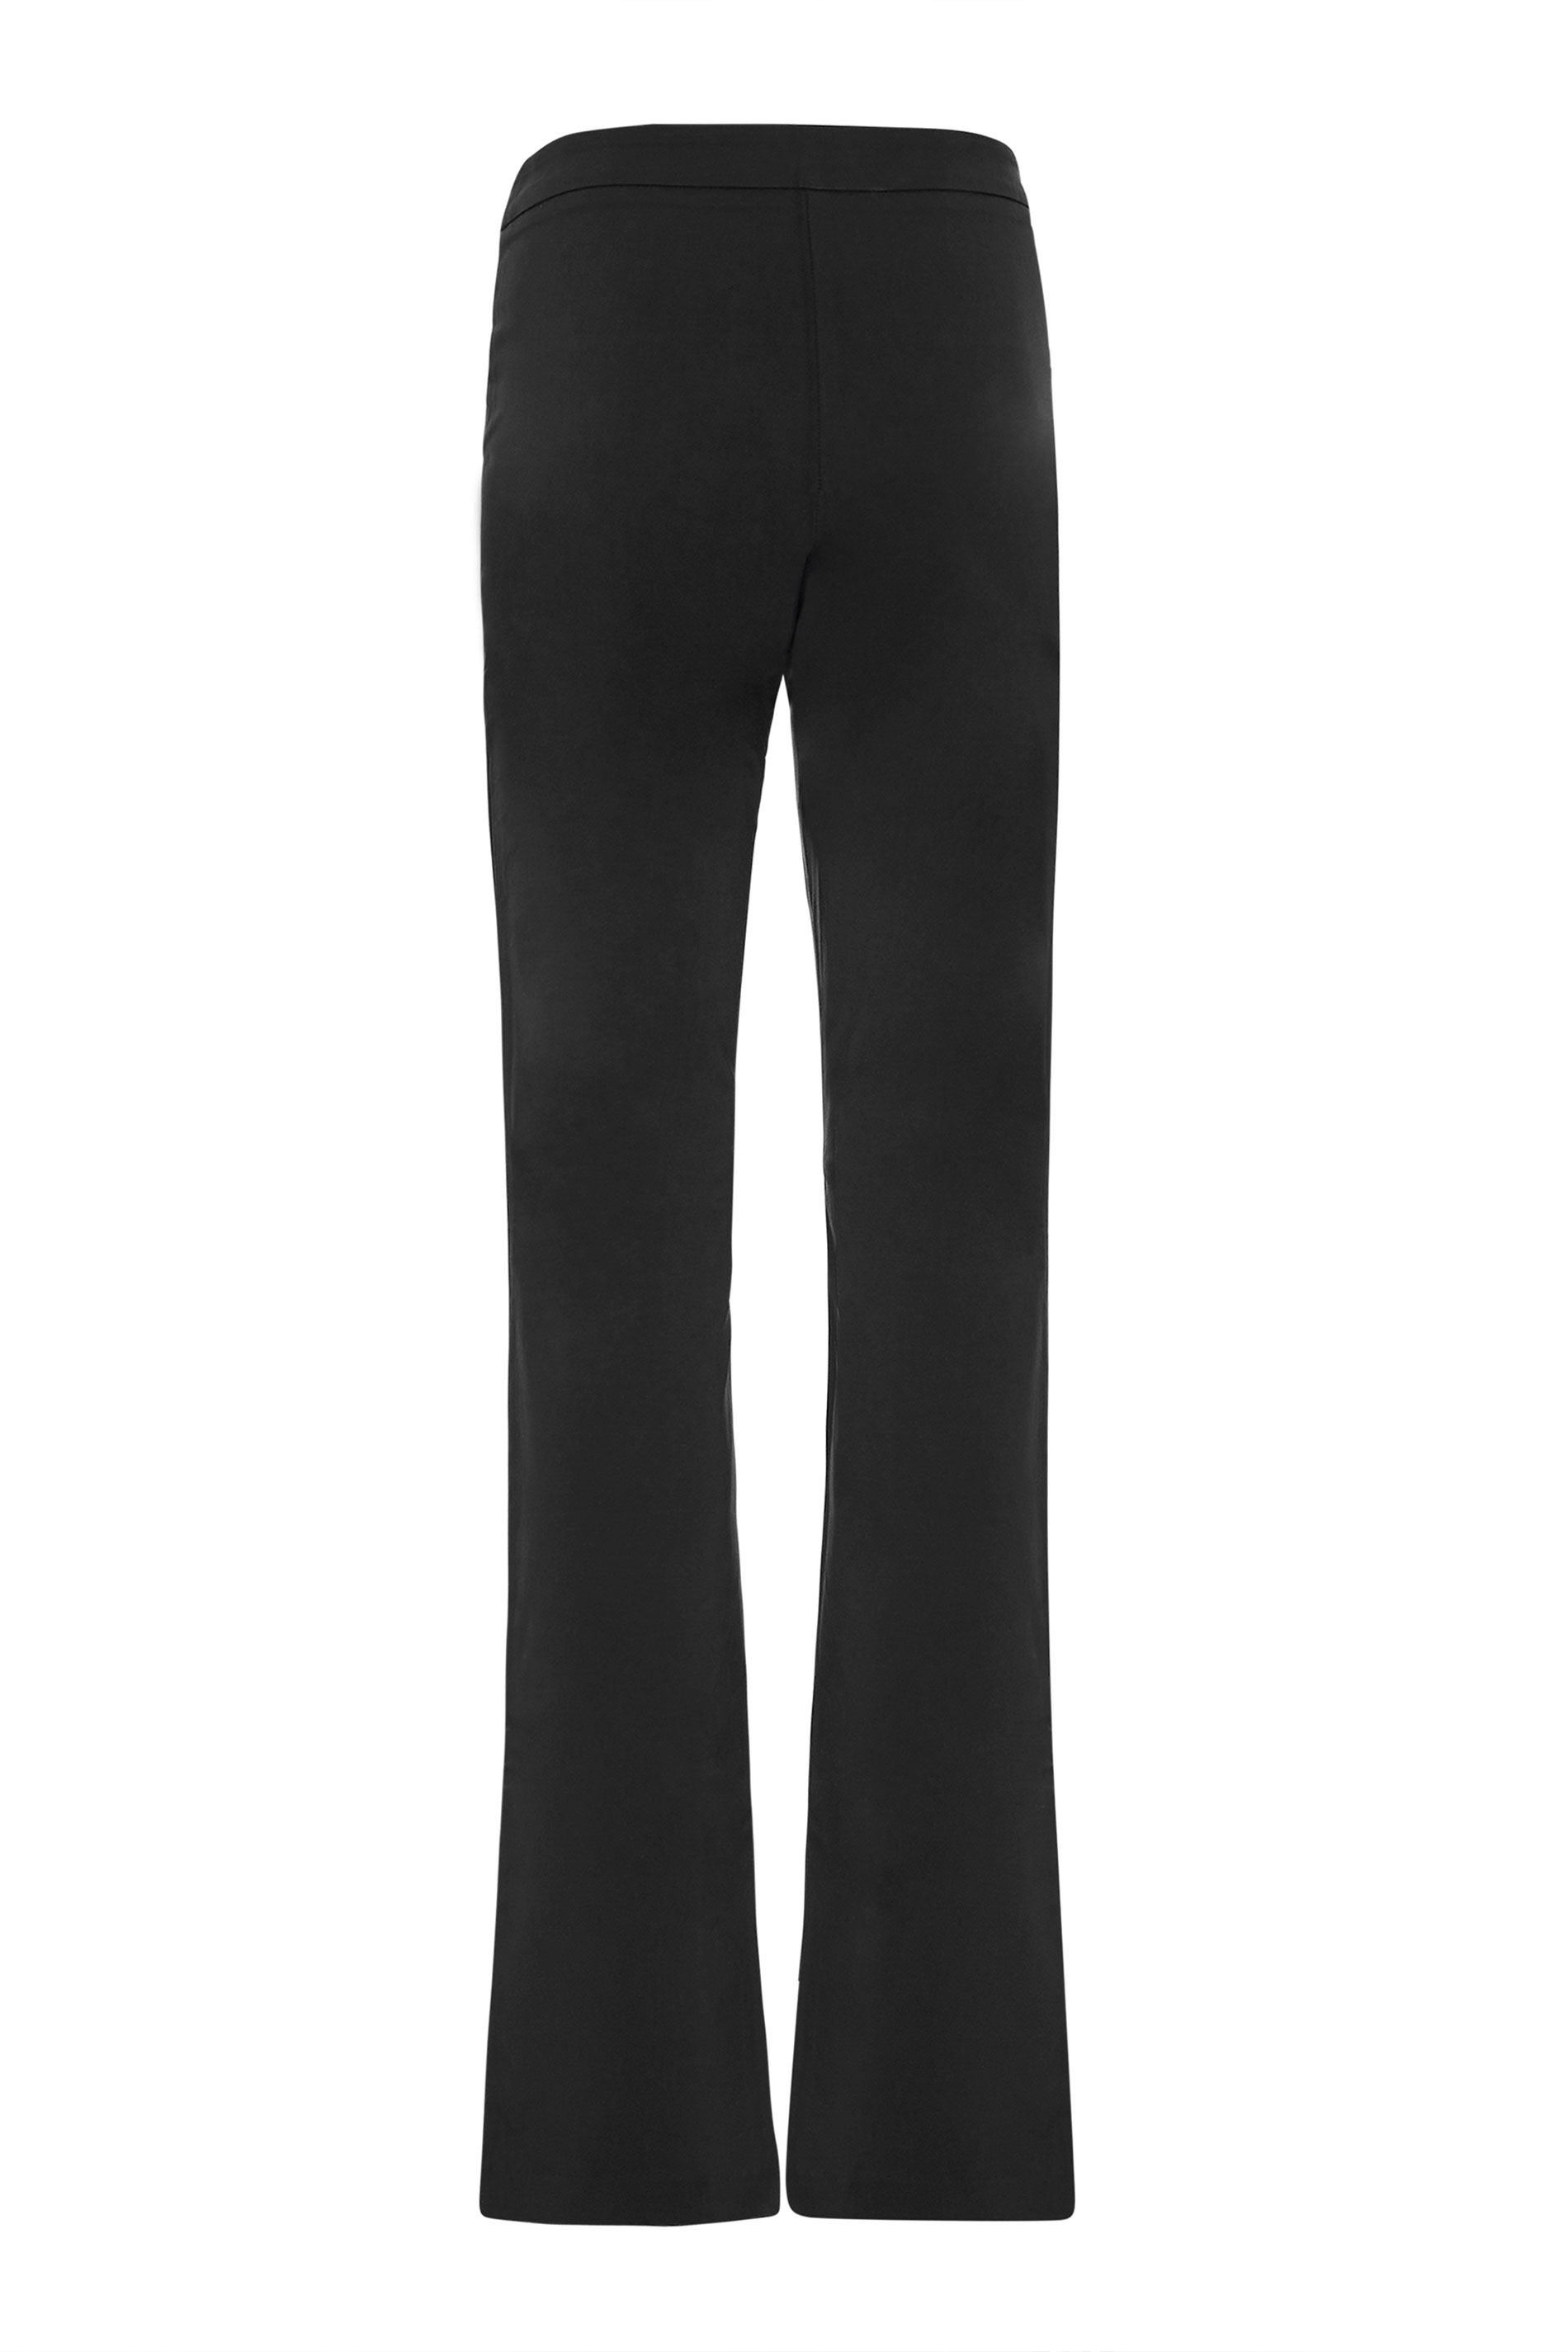 Buy Black Trousers & Pants for Women by TERRANOVA Online | Ajio.com